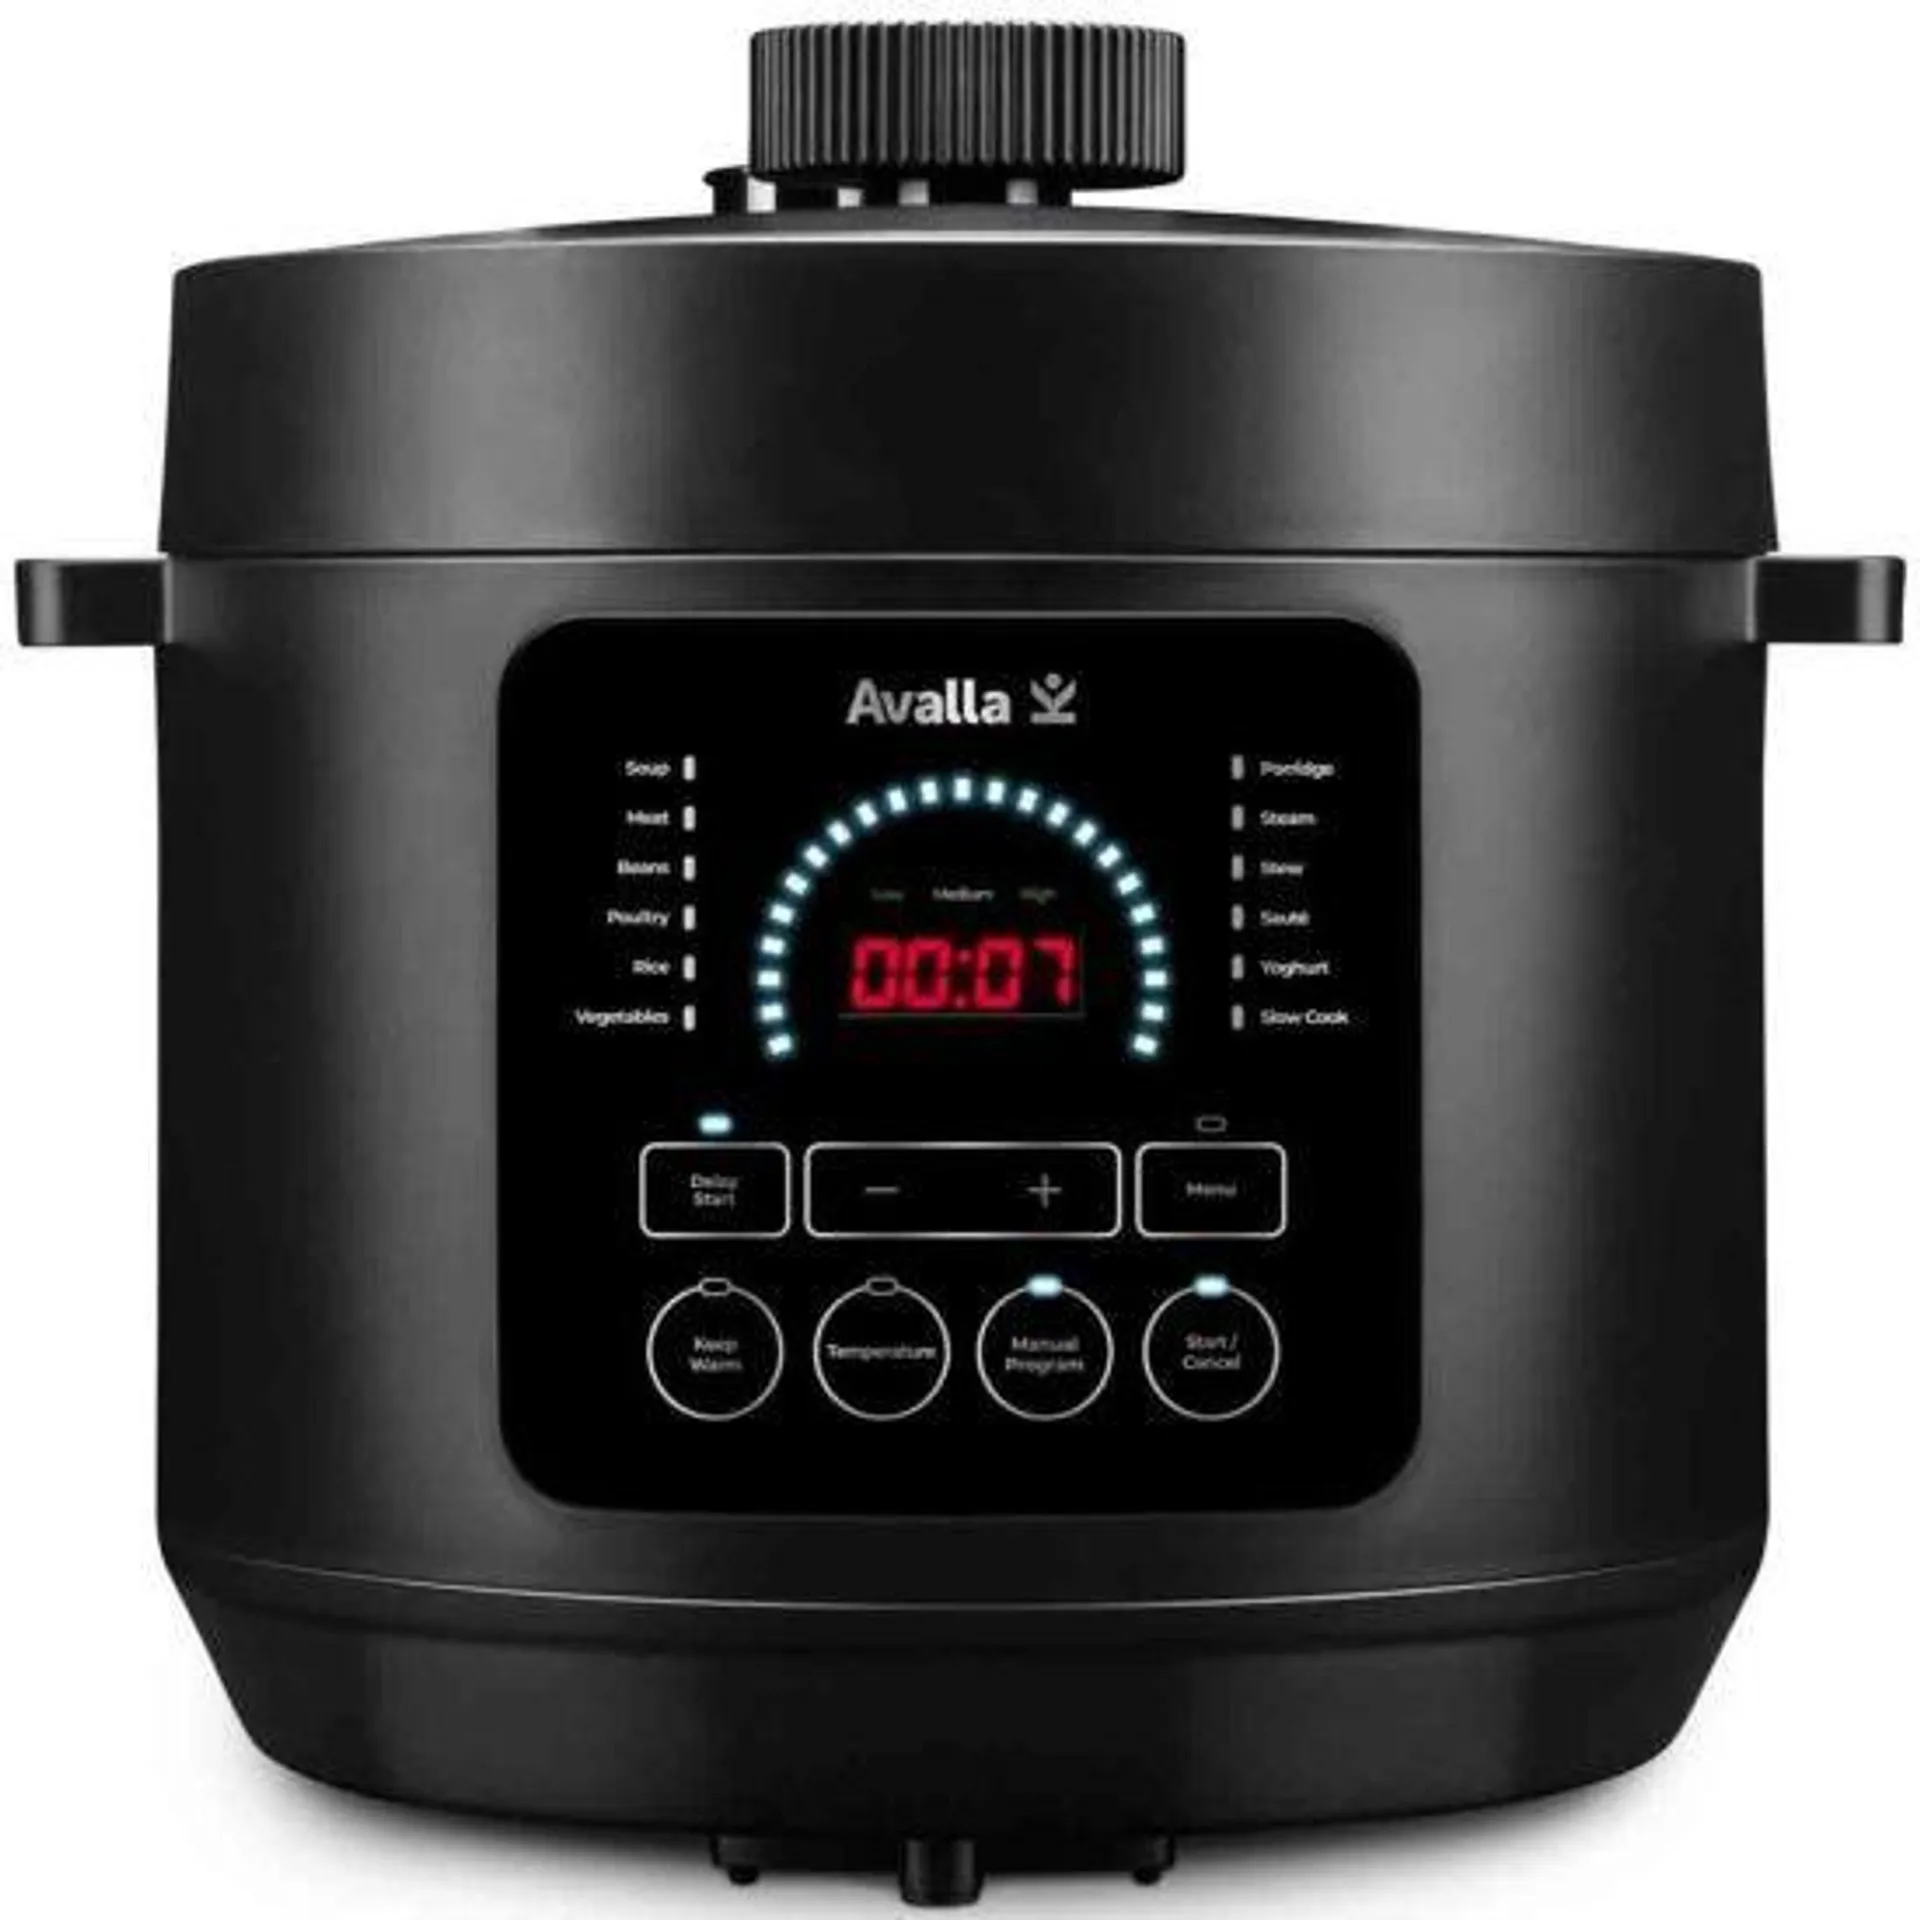 Avalla K-90 6L Smart Pressure Cooker With Slow Cook, Steam, Warm, Saute - Black